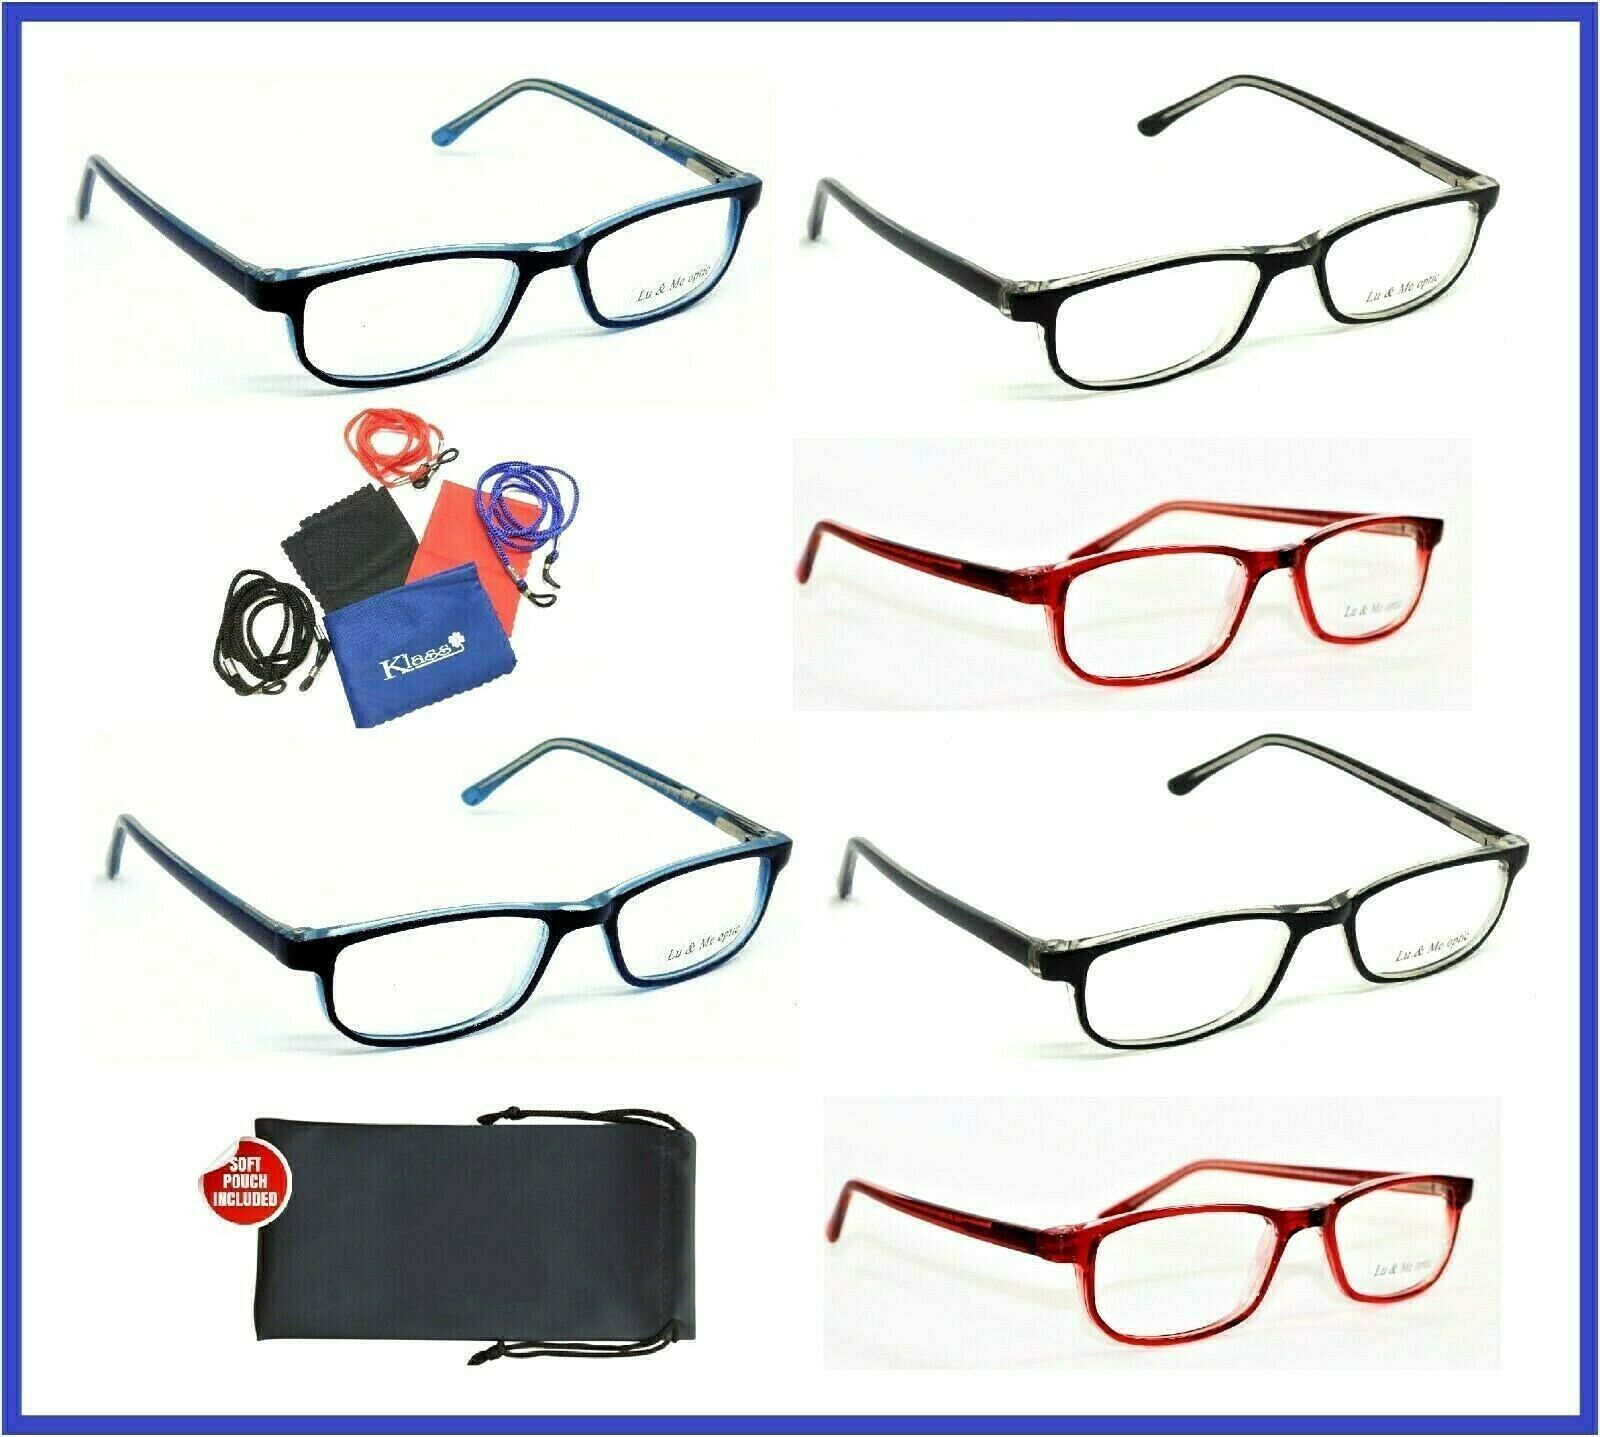 occhiali da lettura colorati blu rossi neri per leggere uomo donna unisex da vista 4 occhiale da vicino per computer da pc graduati +4,00 diottrie riposanti per presbiopia da presbite tablet da riposo +4.0, +4.00, +4,0, +4, 4.00, 4,0, 4.0 diottria gradazione 4